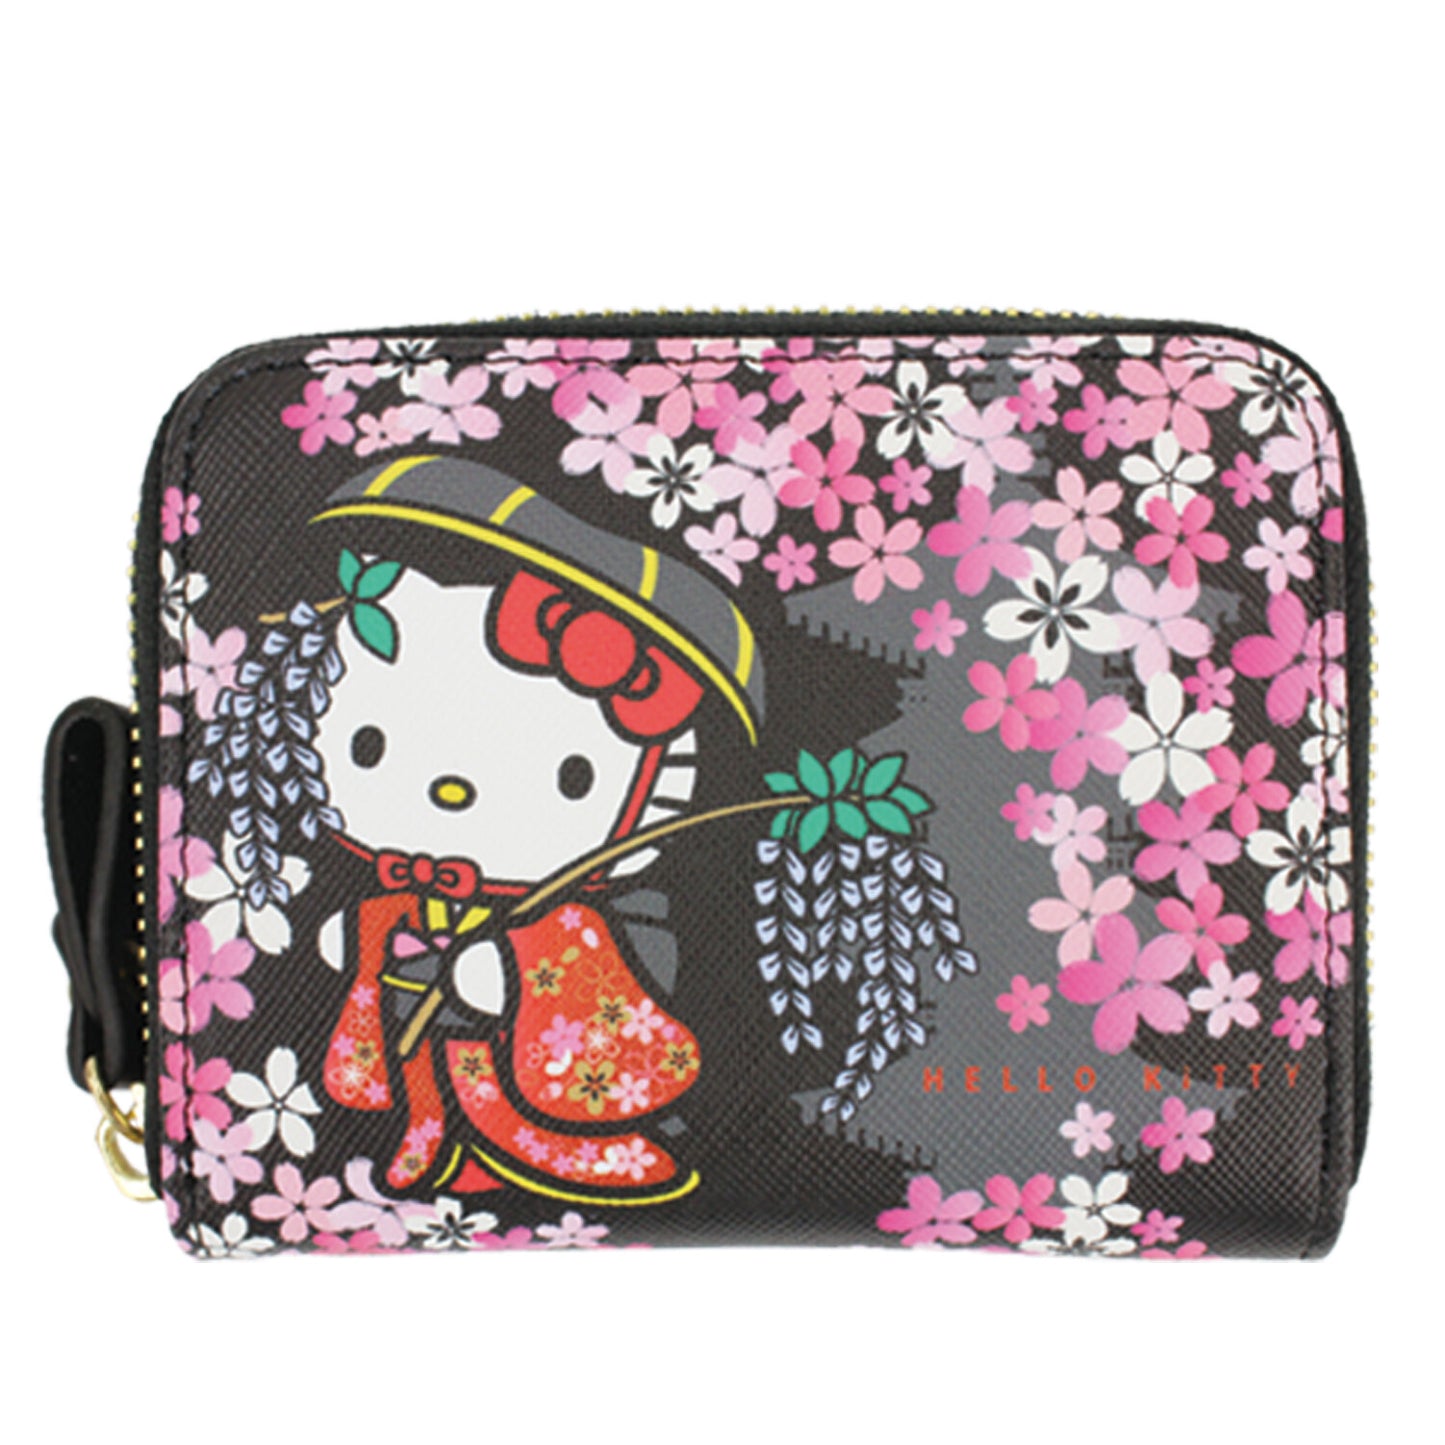  Hello Kitty Japanese pattern long wallet & card holder 